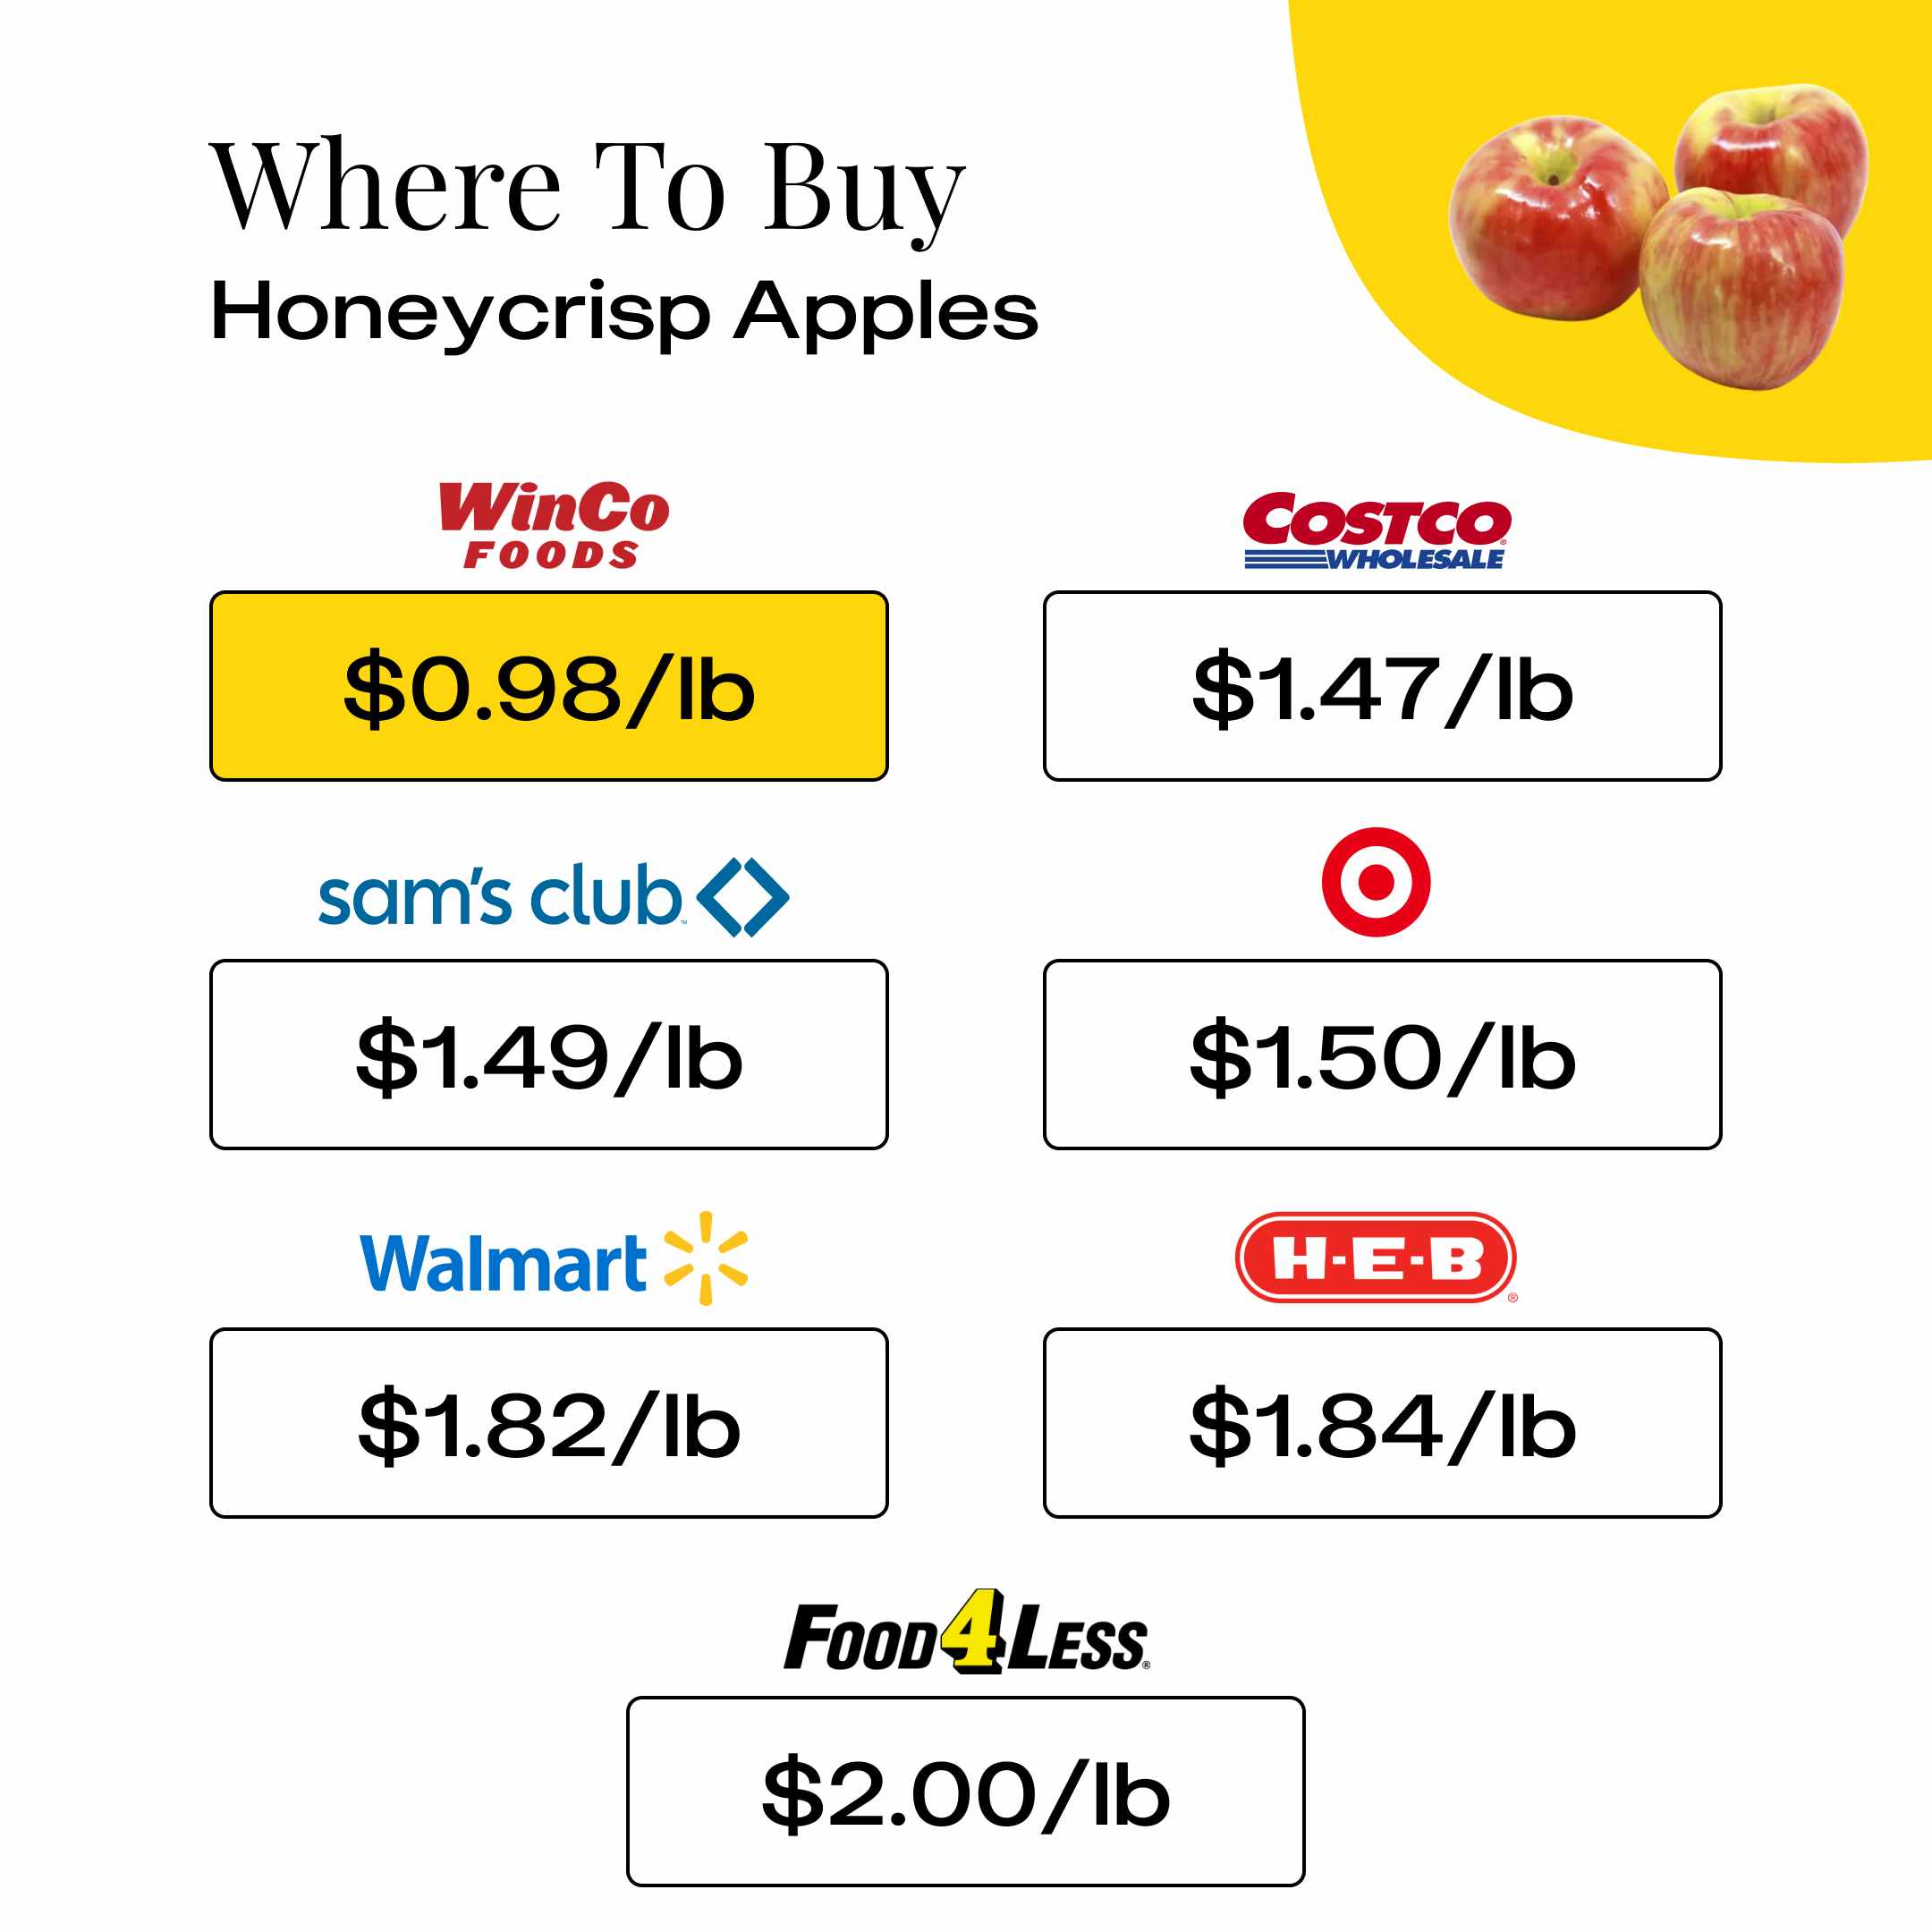 Where To Buy Honeycrisp Apples